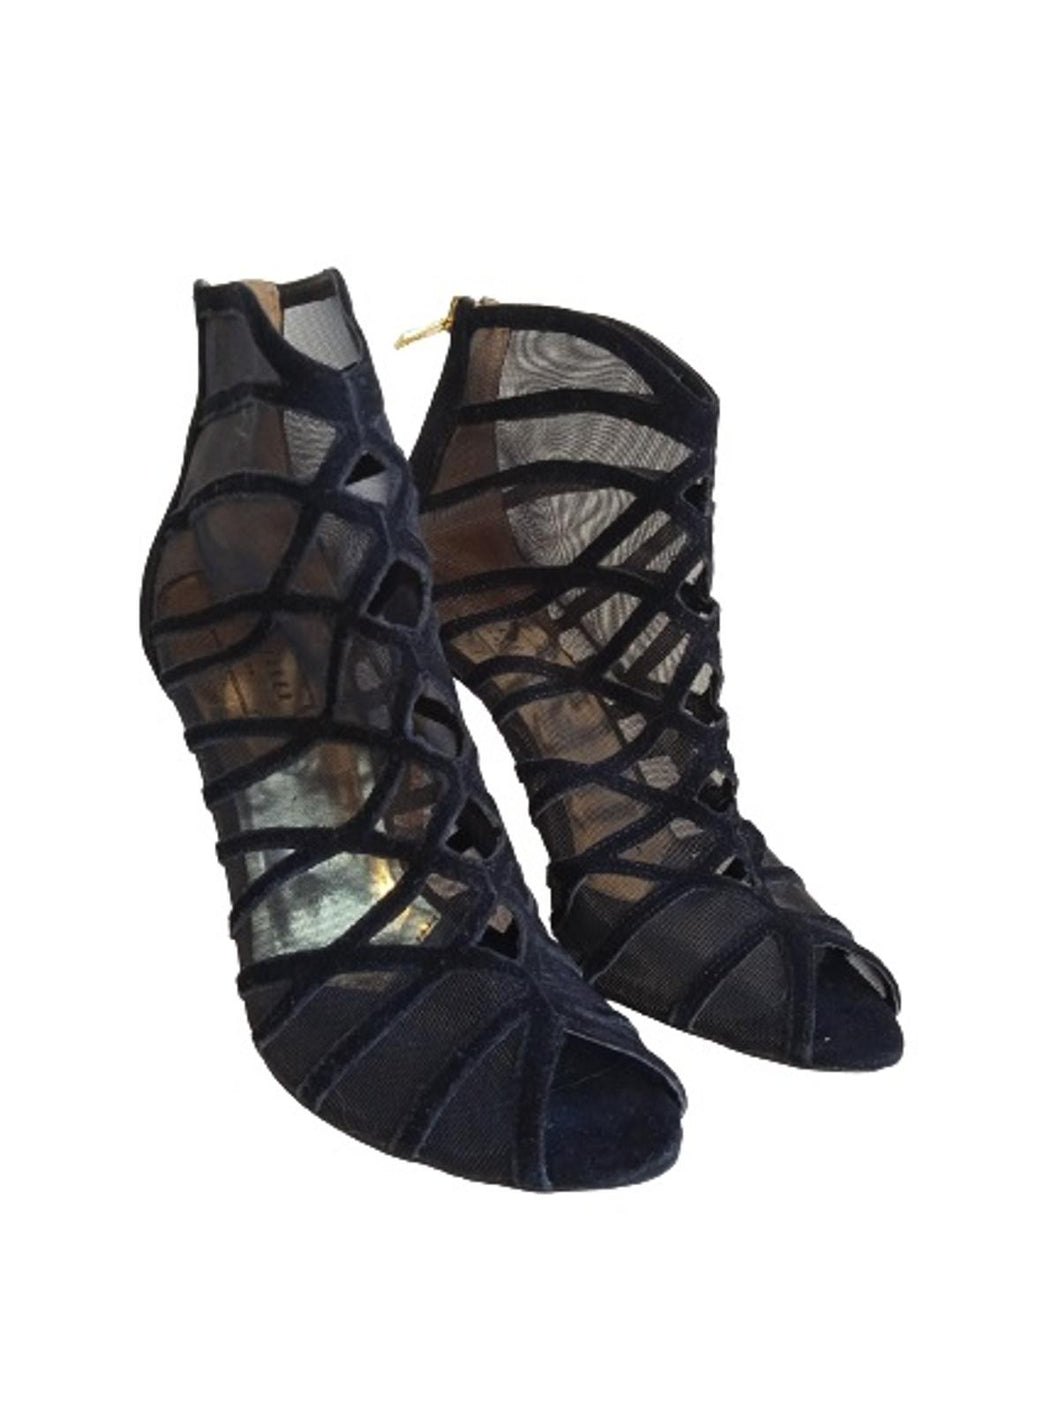 TED BAKER Ladies Black Suede Sheer Panel Elisea Ankle Boots Size EU38 UK5